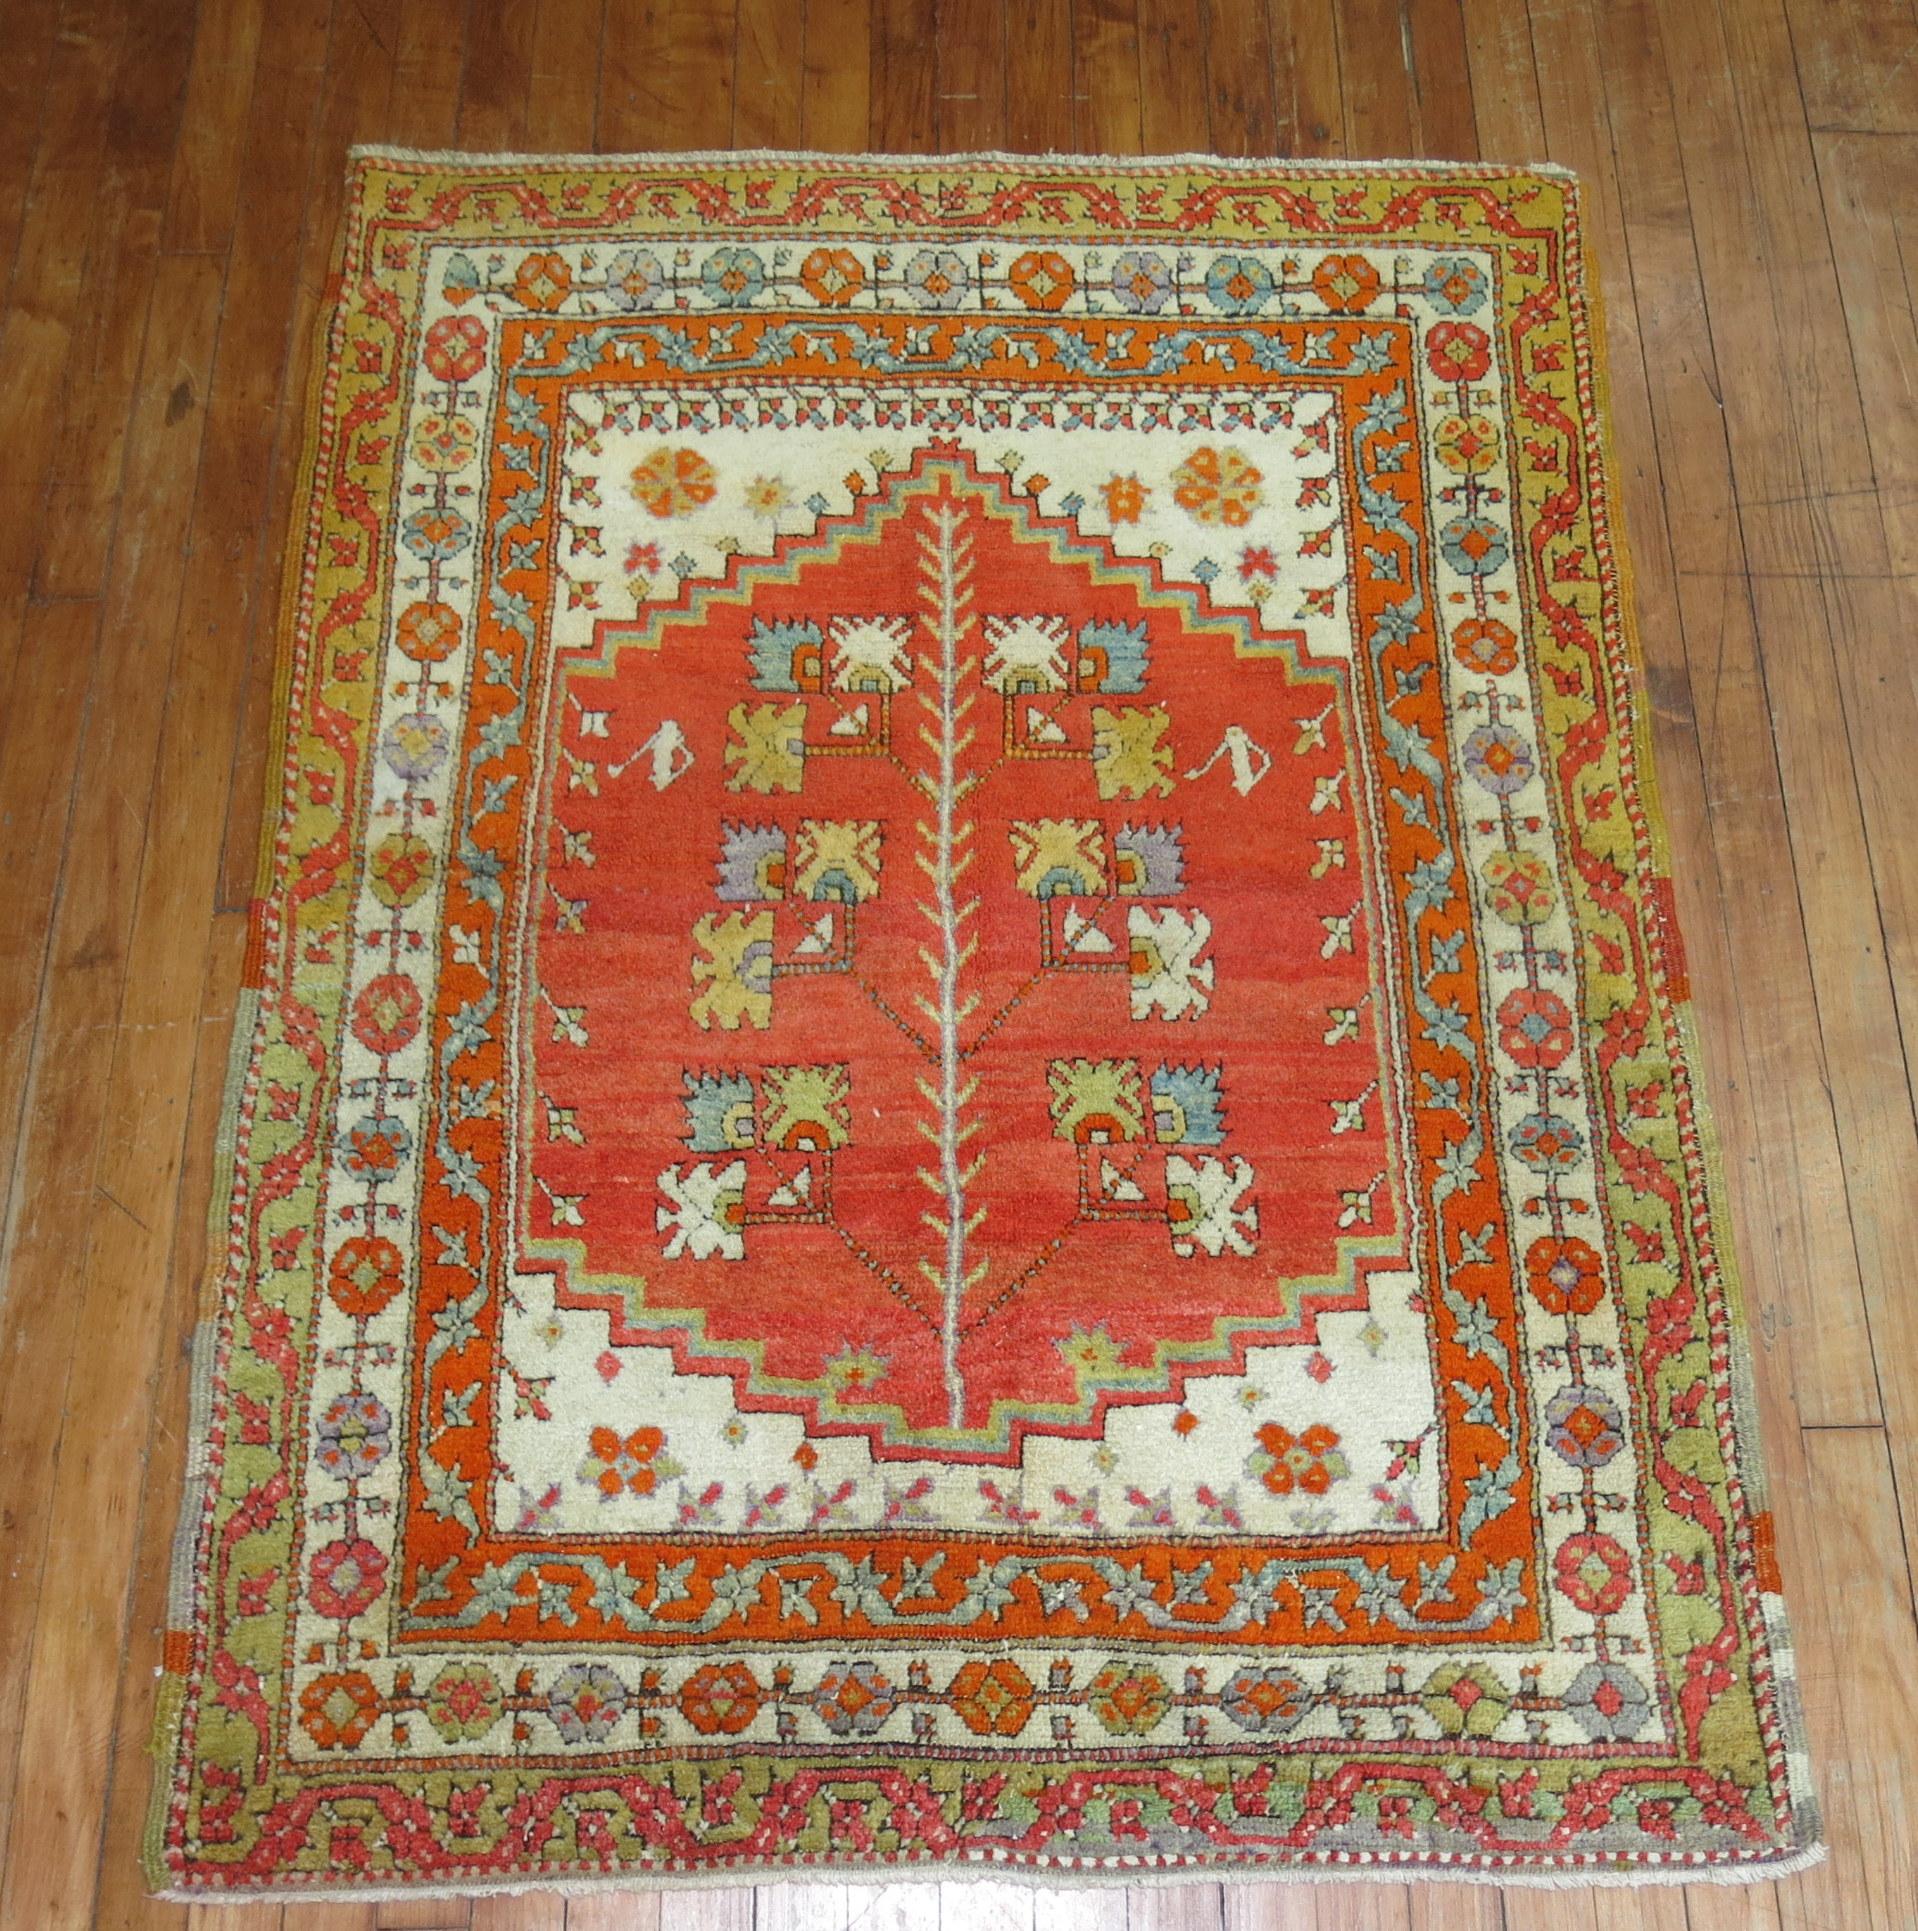 Bright coral antique Turkish Anatolian rug, circa 1930.

Measures: 3'6